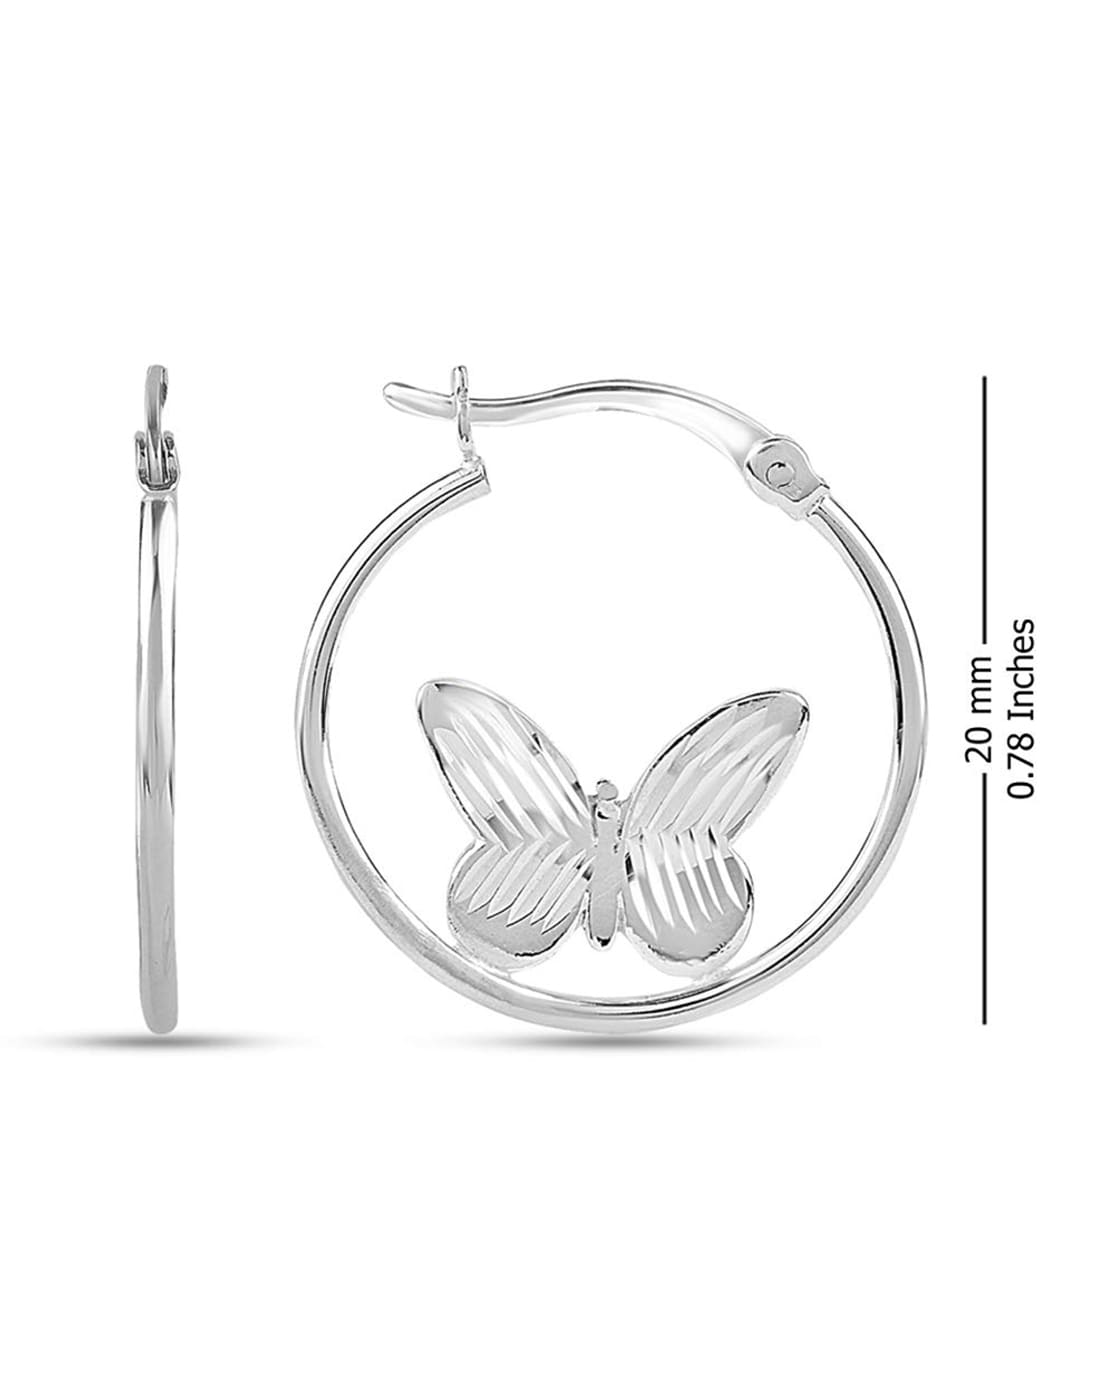 Buy 925 Sterling Silver Gold Butterfly Hoop Earrings Silver Online in India   Etsy